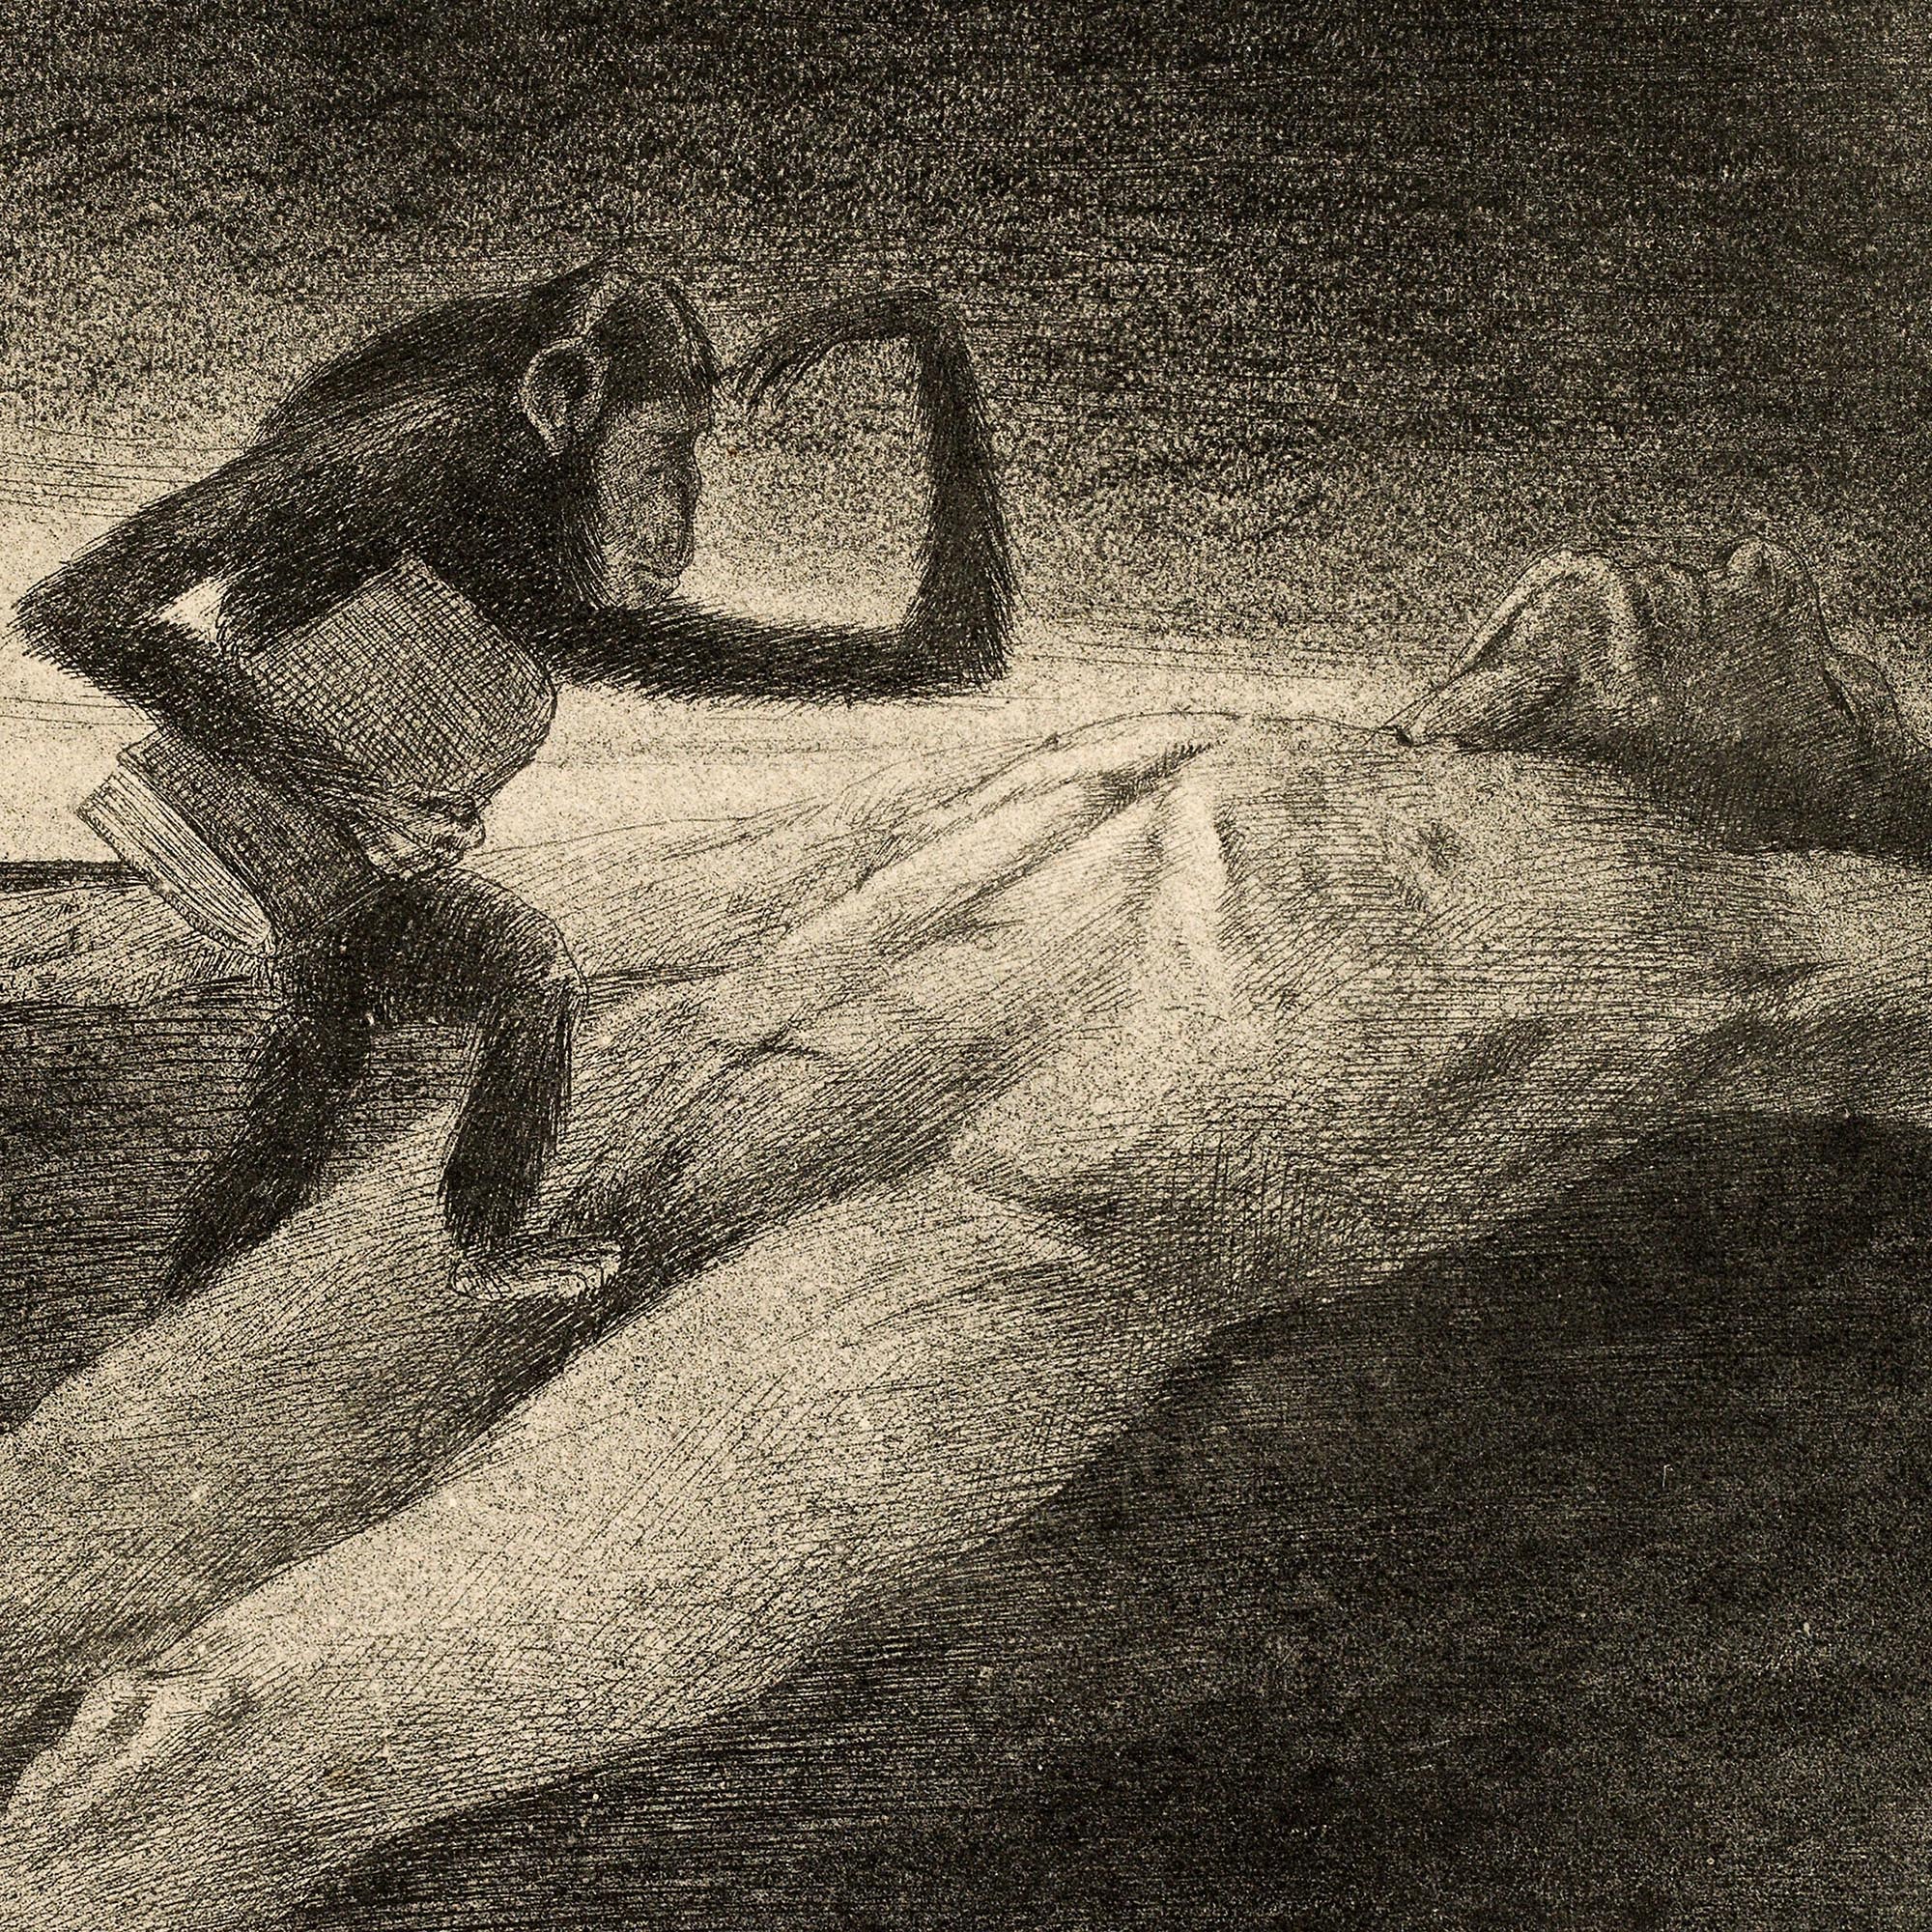 Fine art Alfred Kubin, Wissenschaft | 19th-Century Surreal Symbolist Lithograph | Grotesque Fantasy Occult Chimp Monkey Ape Framed Art Print